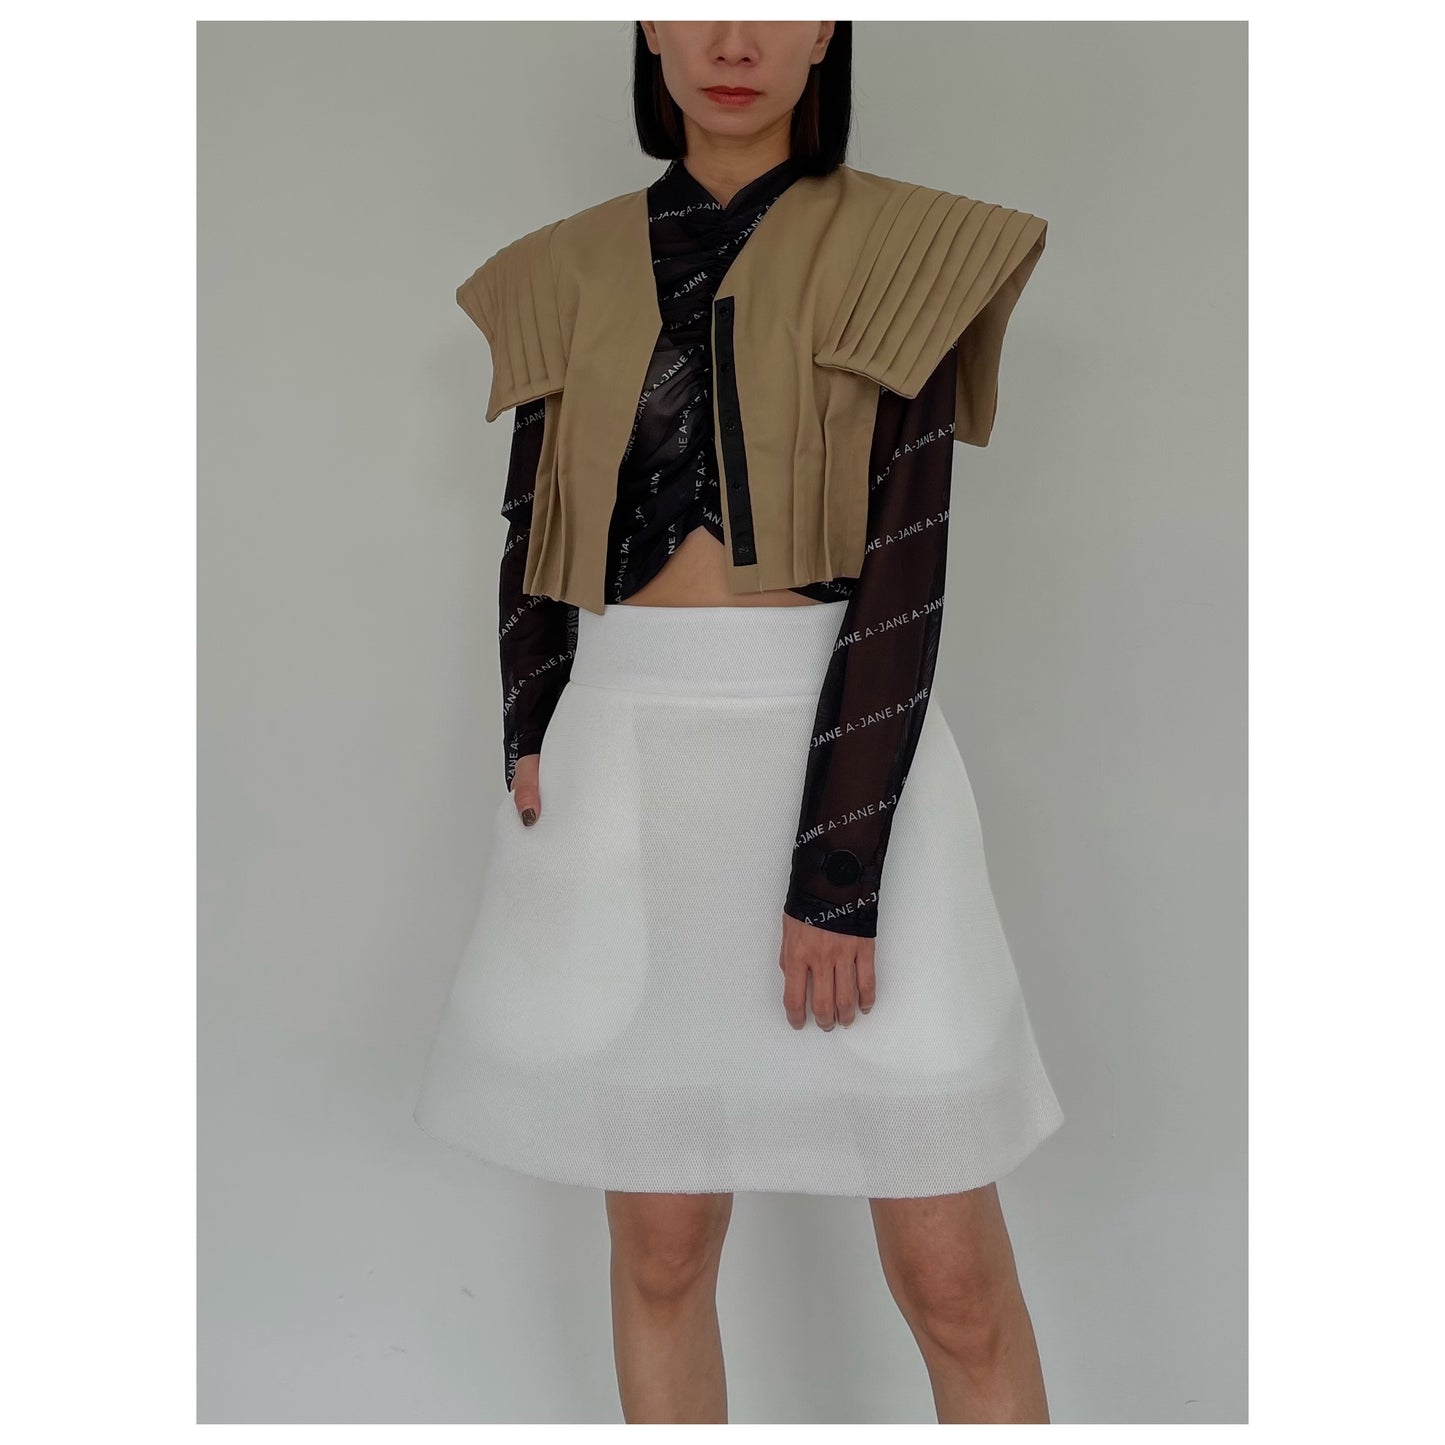 A-JANE Lolly Spongy A-Line Mini Skirt